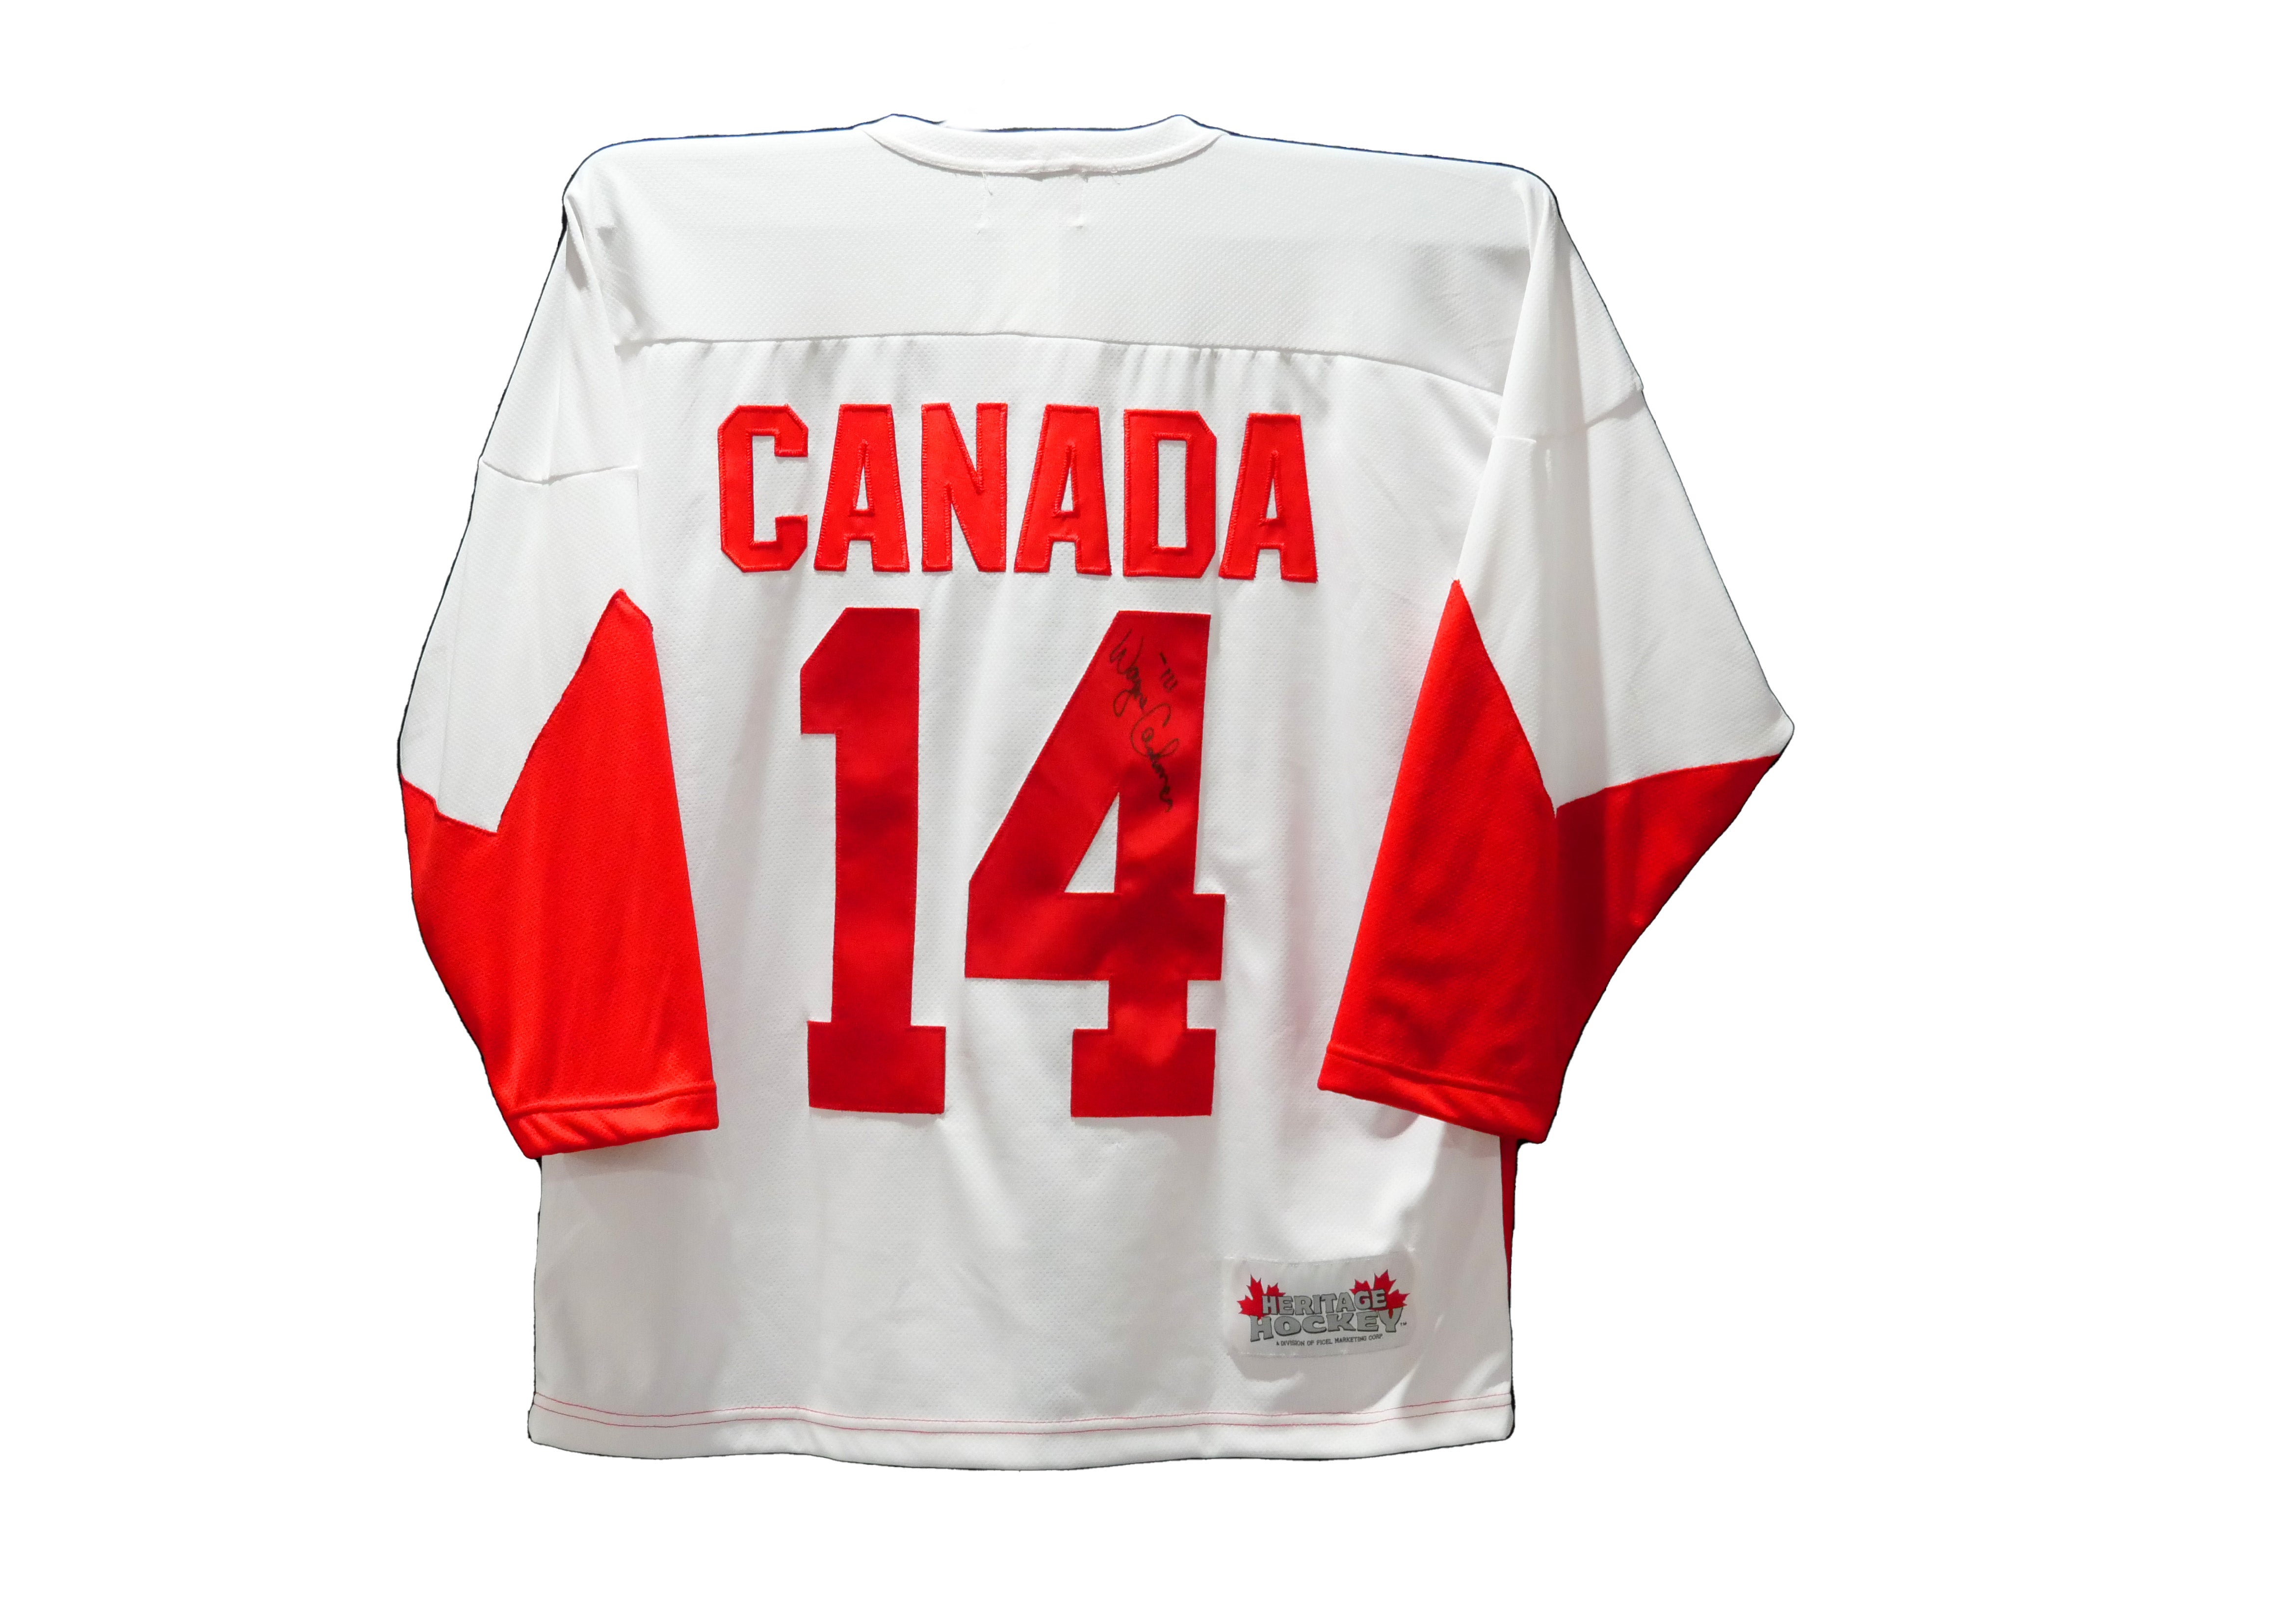 Wayne Cashman Authentic Autographed Team Canada 1972 White Jersey